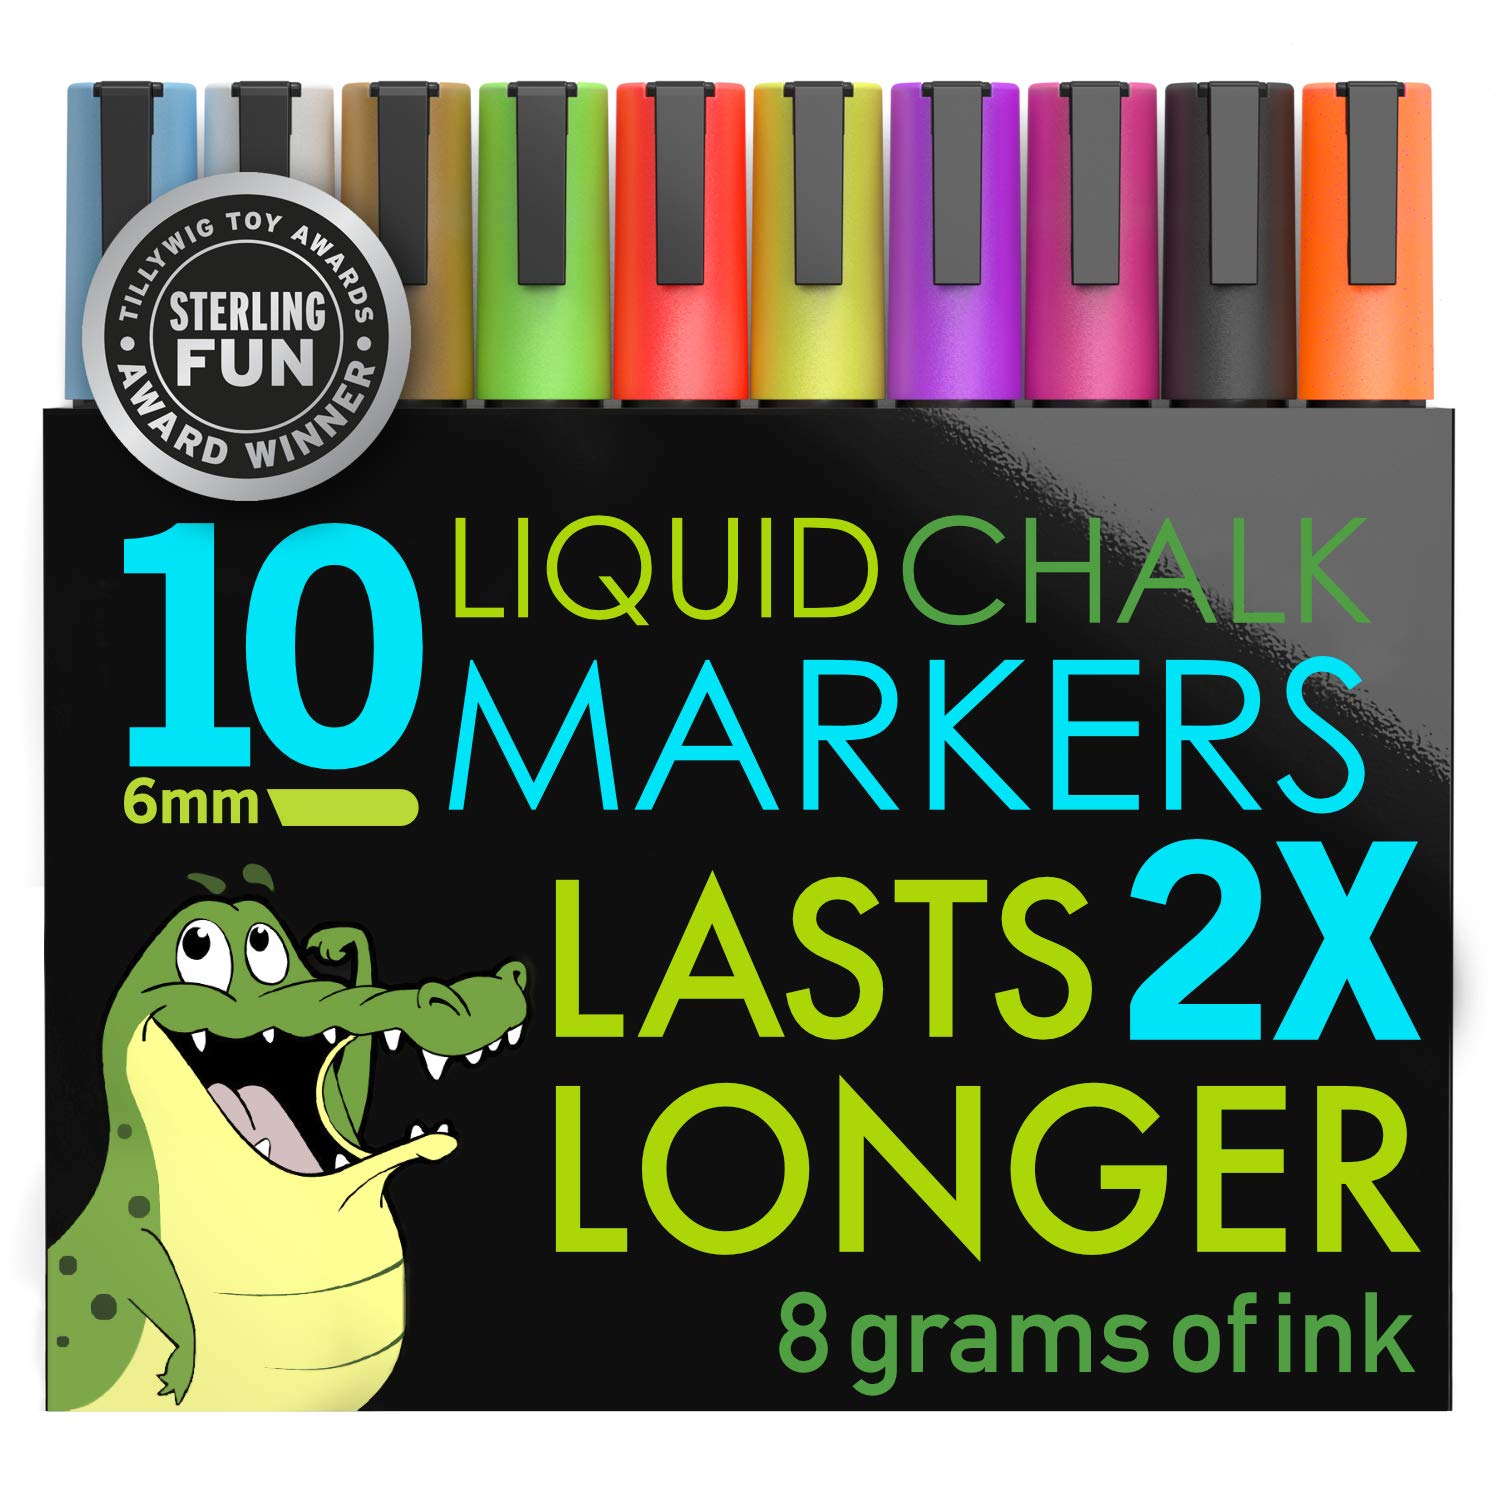 Liquid Chalk Markers for Blackboards - Use As Glass Window Markers Mirror Pens Blackboard or Chalkboard Markers - 8 Bold Neon Colors - Wet or Dry